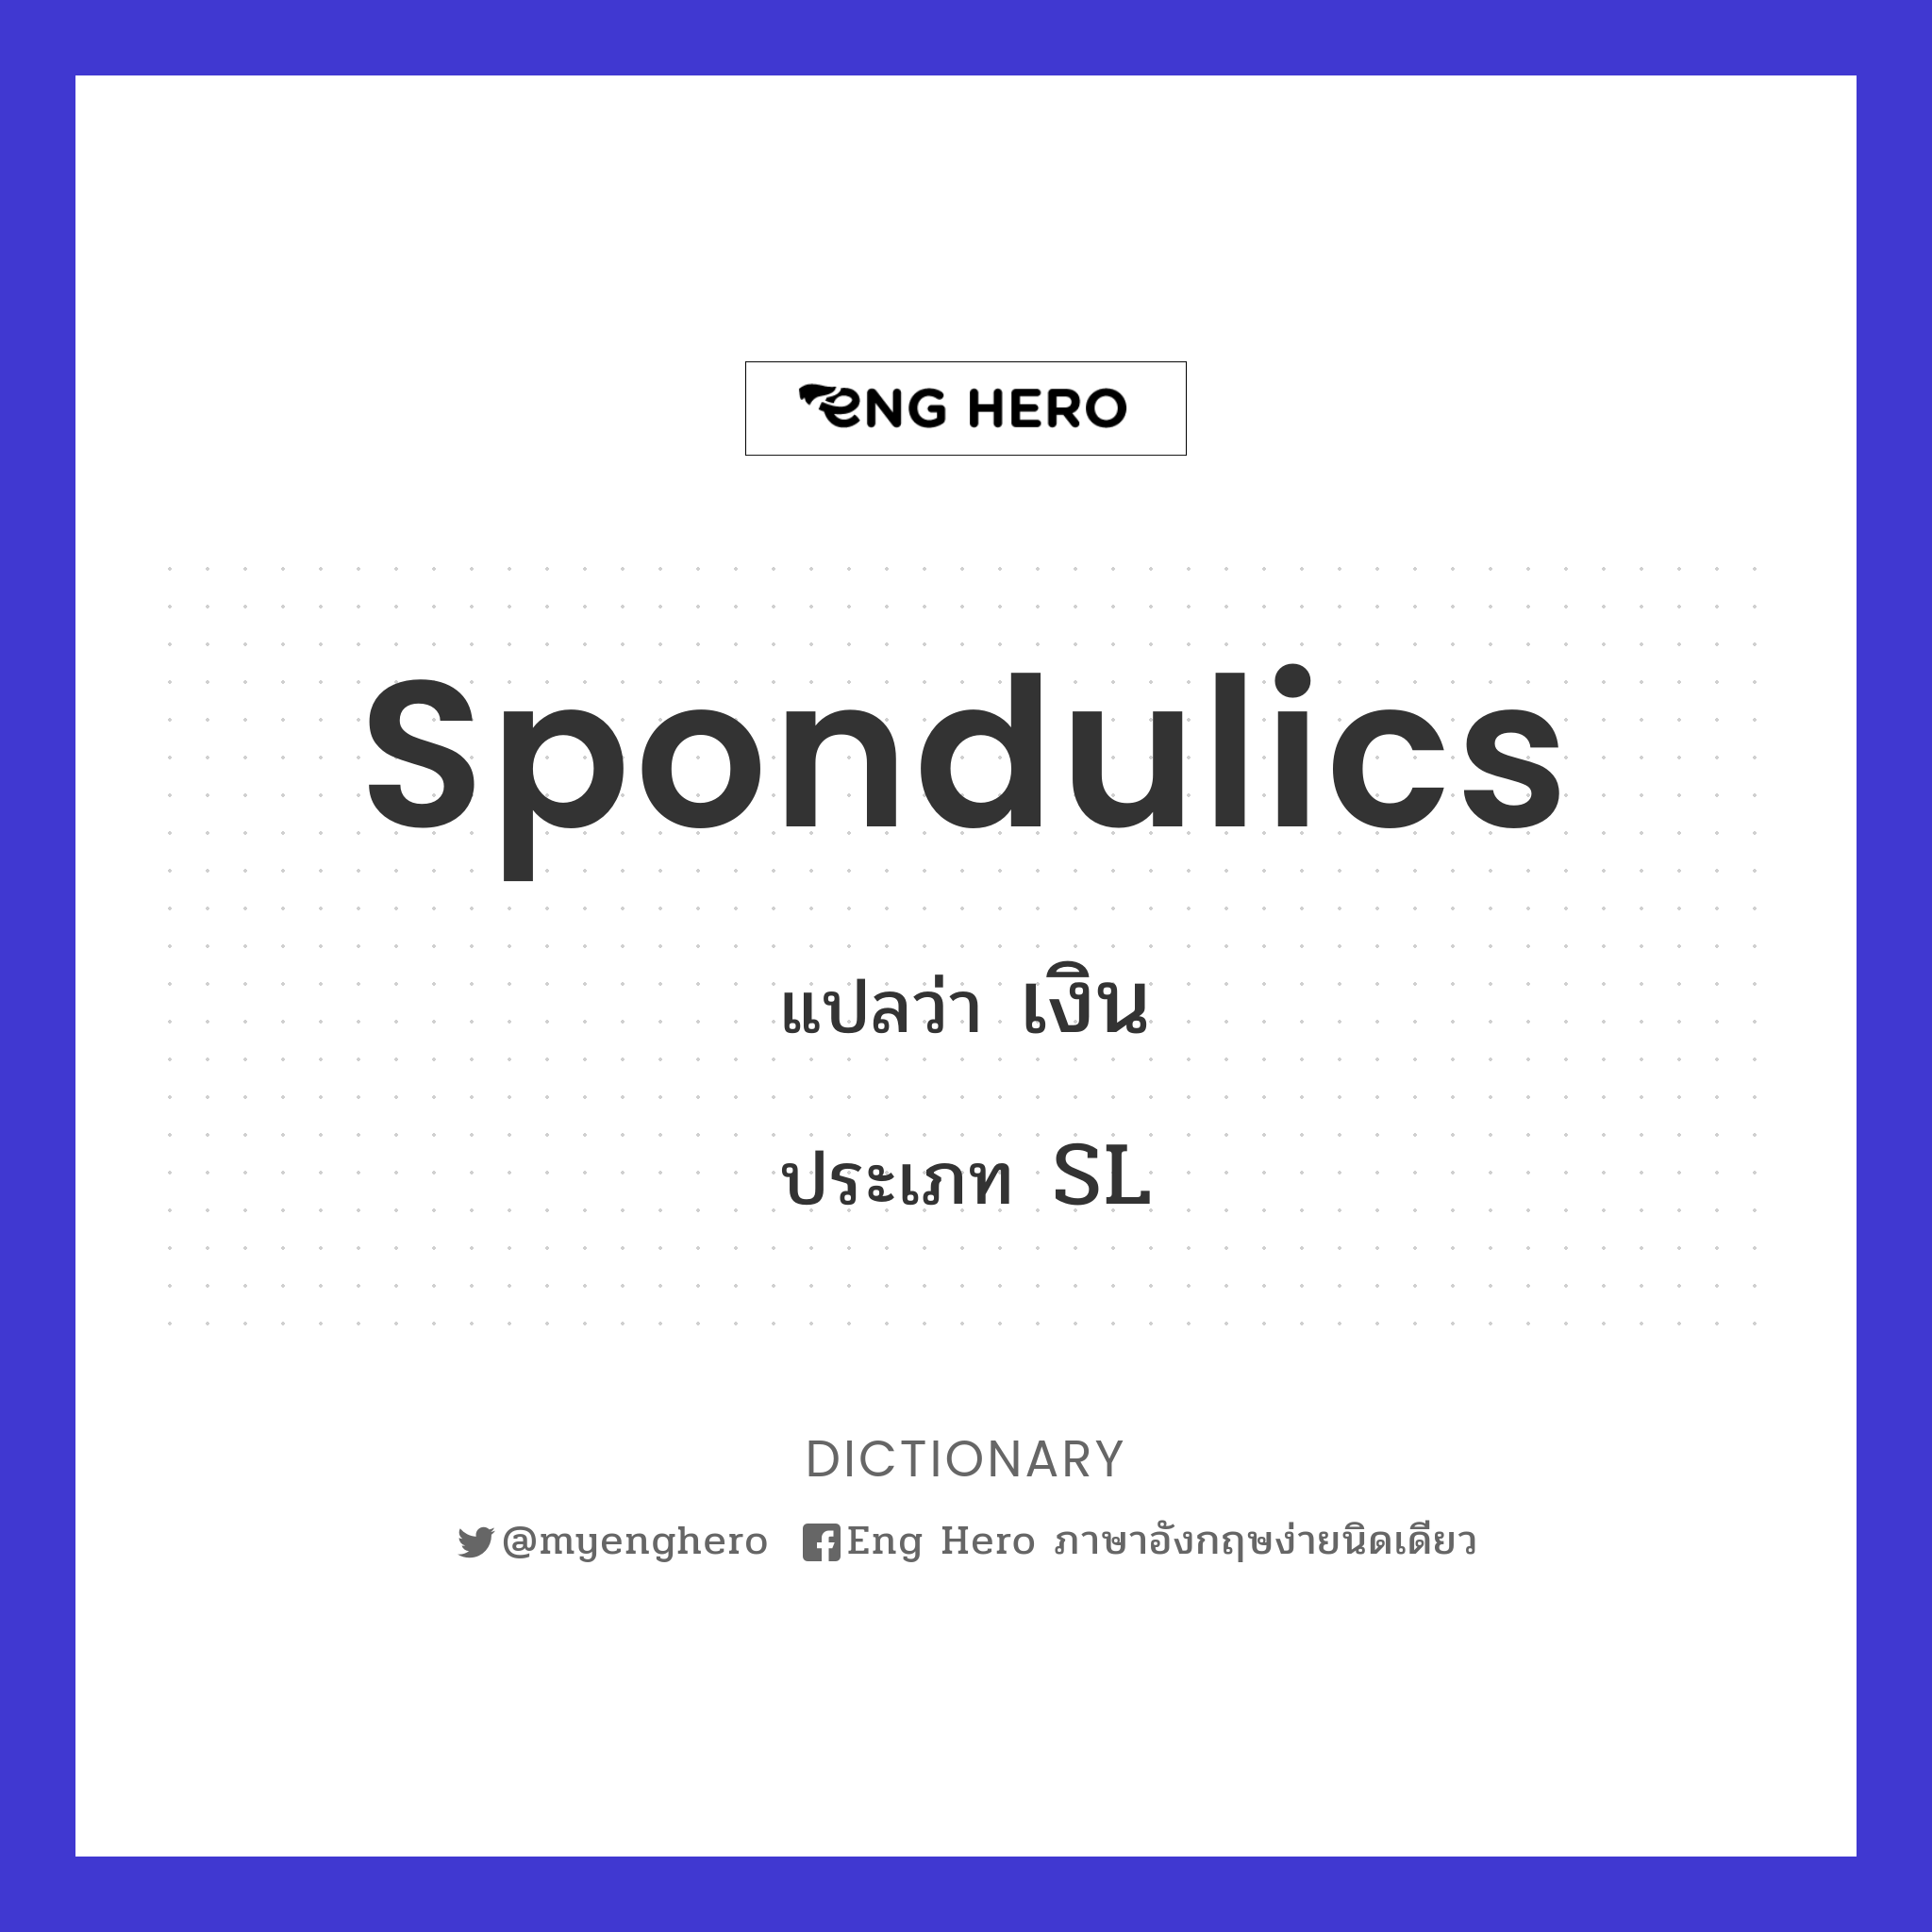 spondulics